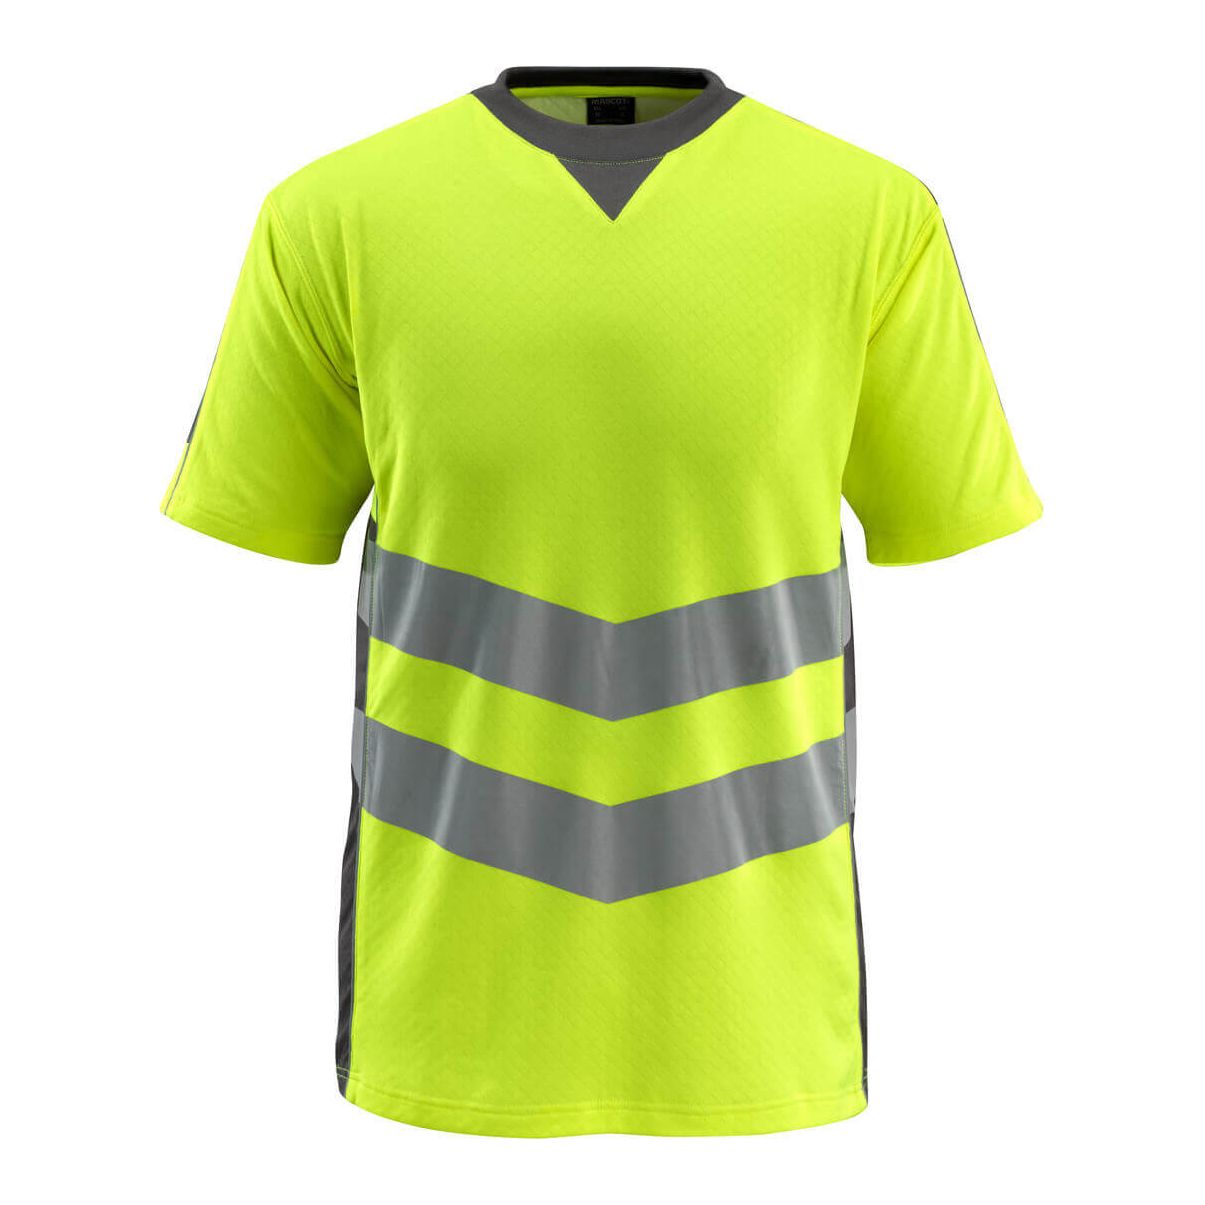 Mascot Sandwell Hi-Vis T-shirt 50127-933 Front #colour_hi-vis-yellow-dark-anthracite-grey